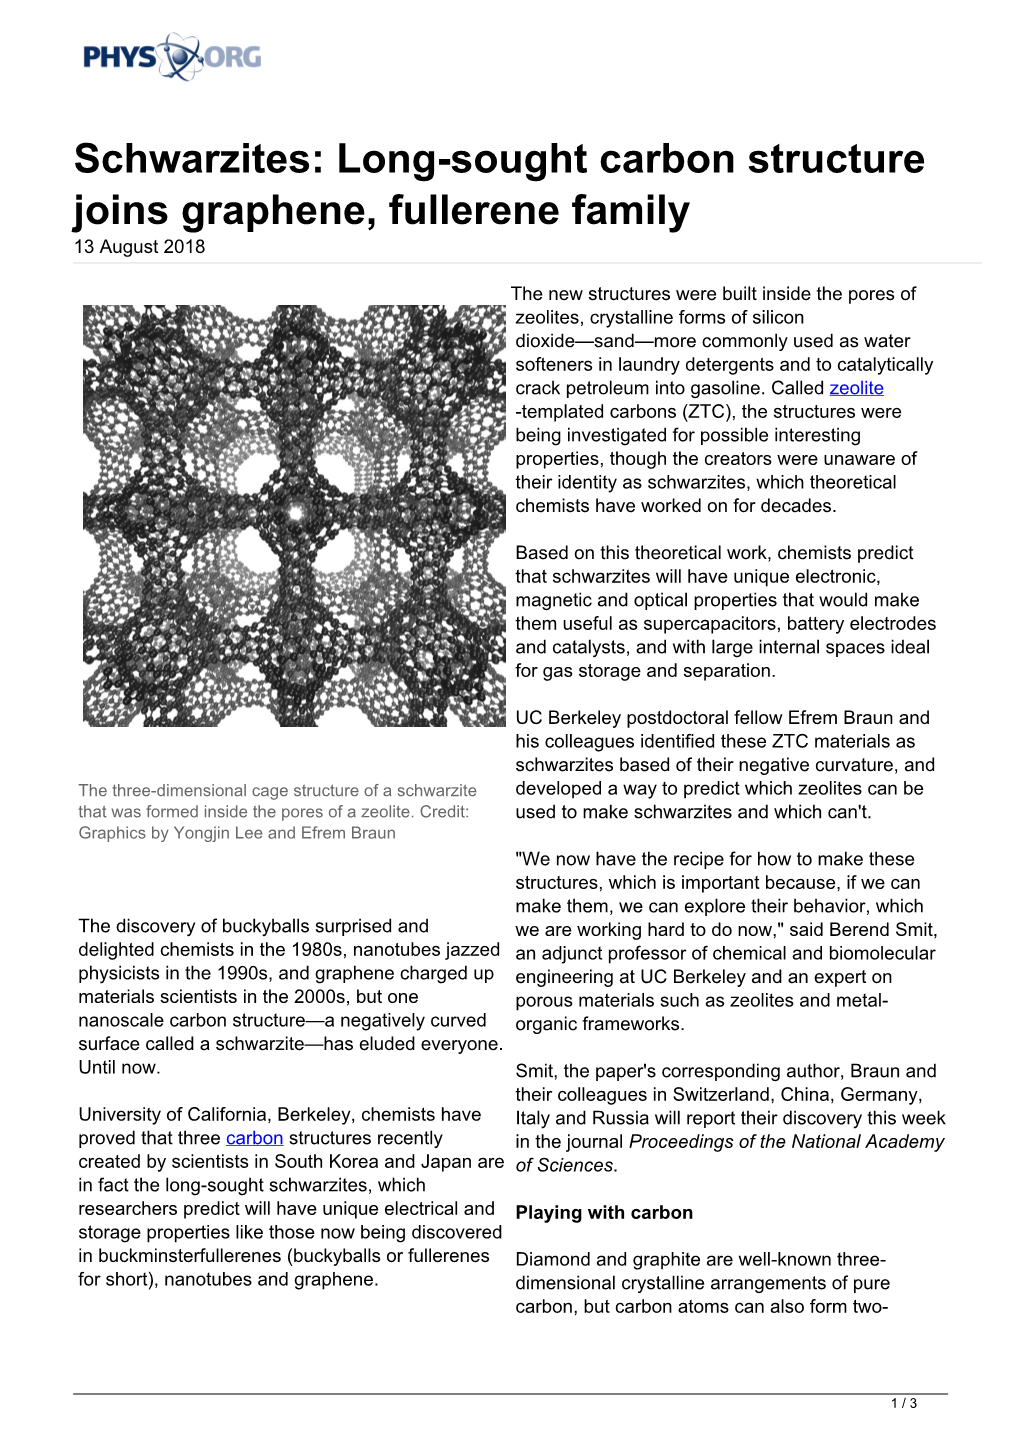 Long-Sought Carbon Structure Joins Graphene, Fullerene Family 13 August 2018